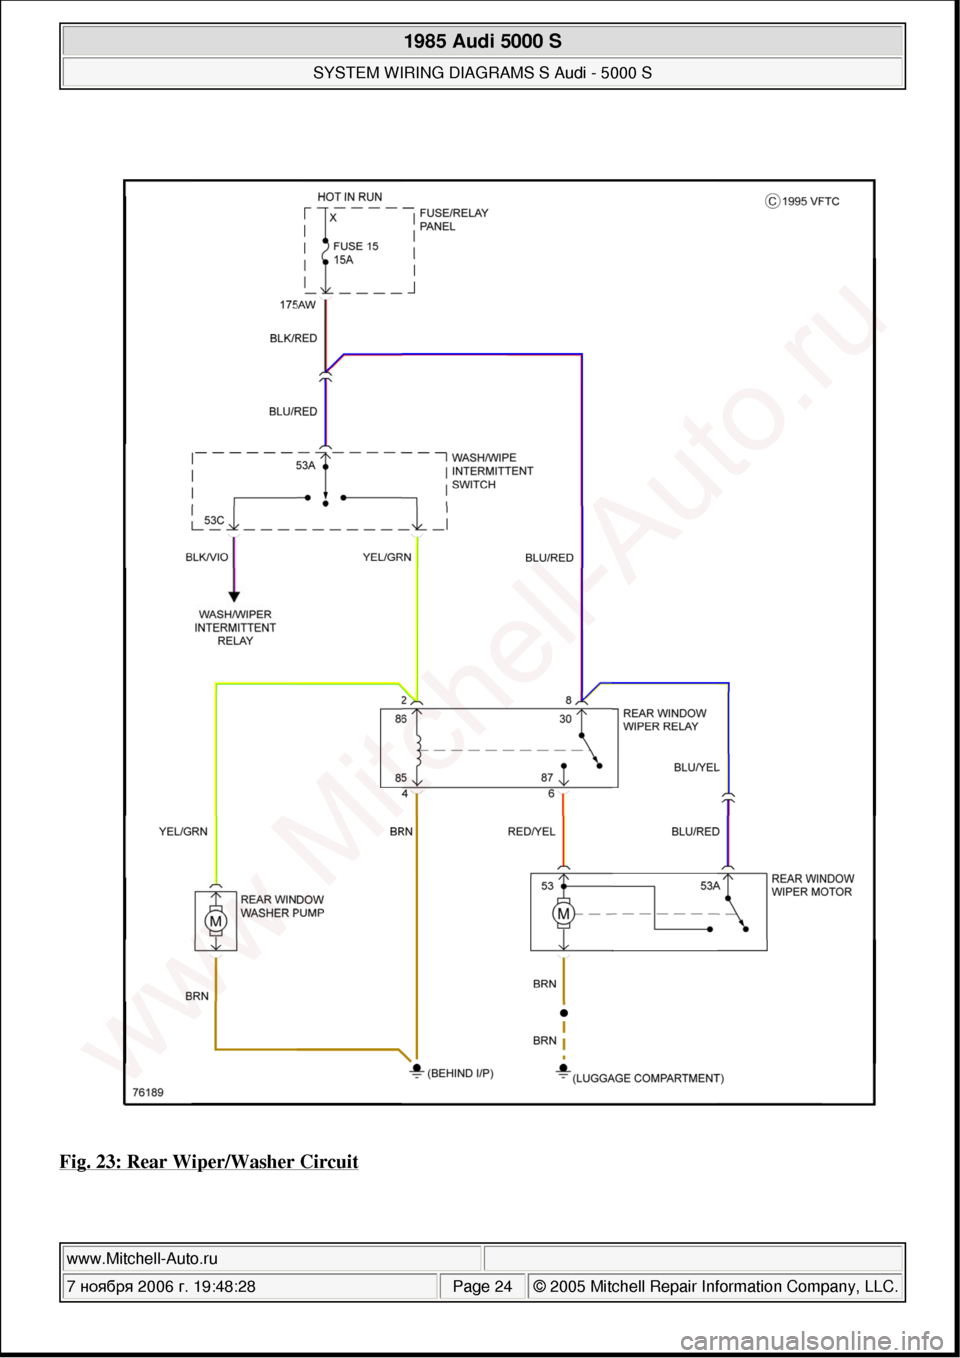 AUDI 5000S 1985 C2 System Wiring Diagram 
Fig. 23: Rear Wiper/Washer Circuit 
 
1985 Audi 5000 S 
SYSTEM WIRING DIAGRAMS S Audi - 5000 S  
www.Mitchell-Auto.ru  
7 ноября  2006 г. 19:48:28Page 24 © 2005 Mitchell Repair Information Co